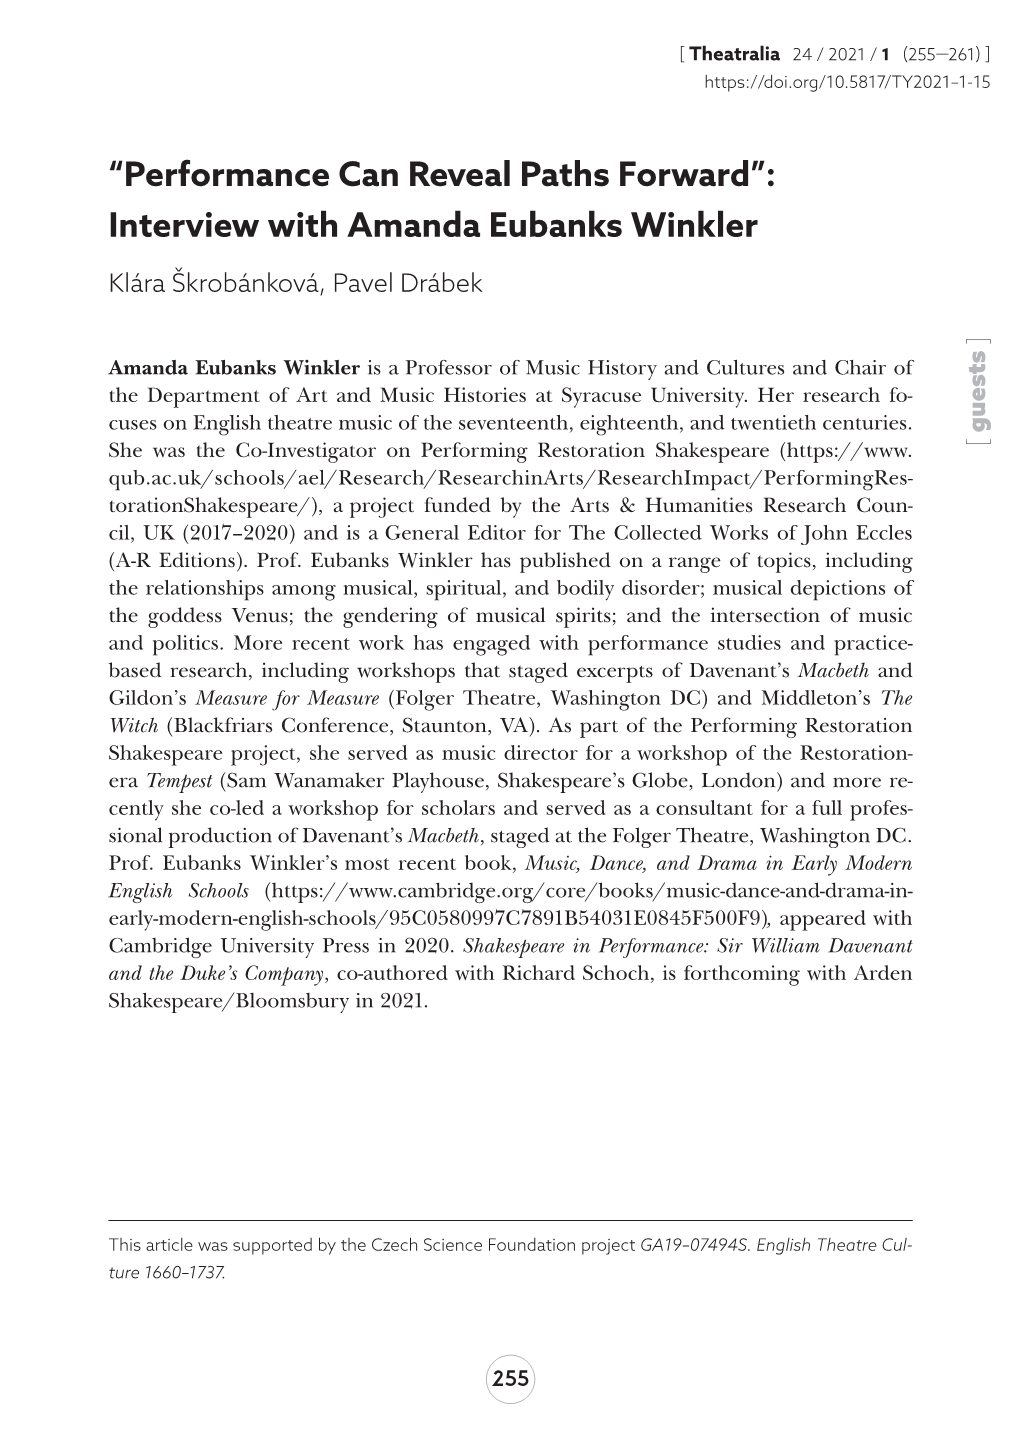 Interview with Amanda Eubanks Winkler